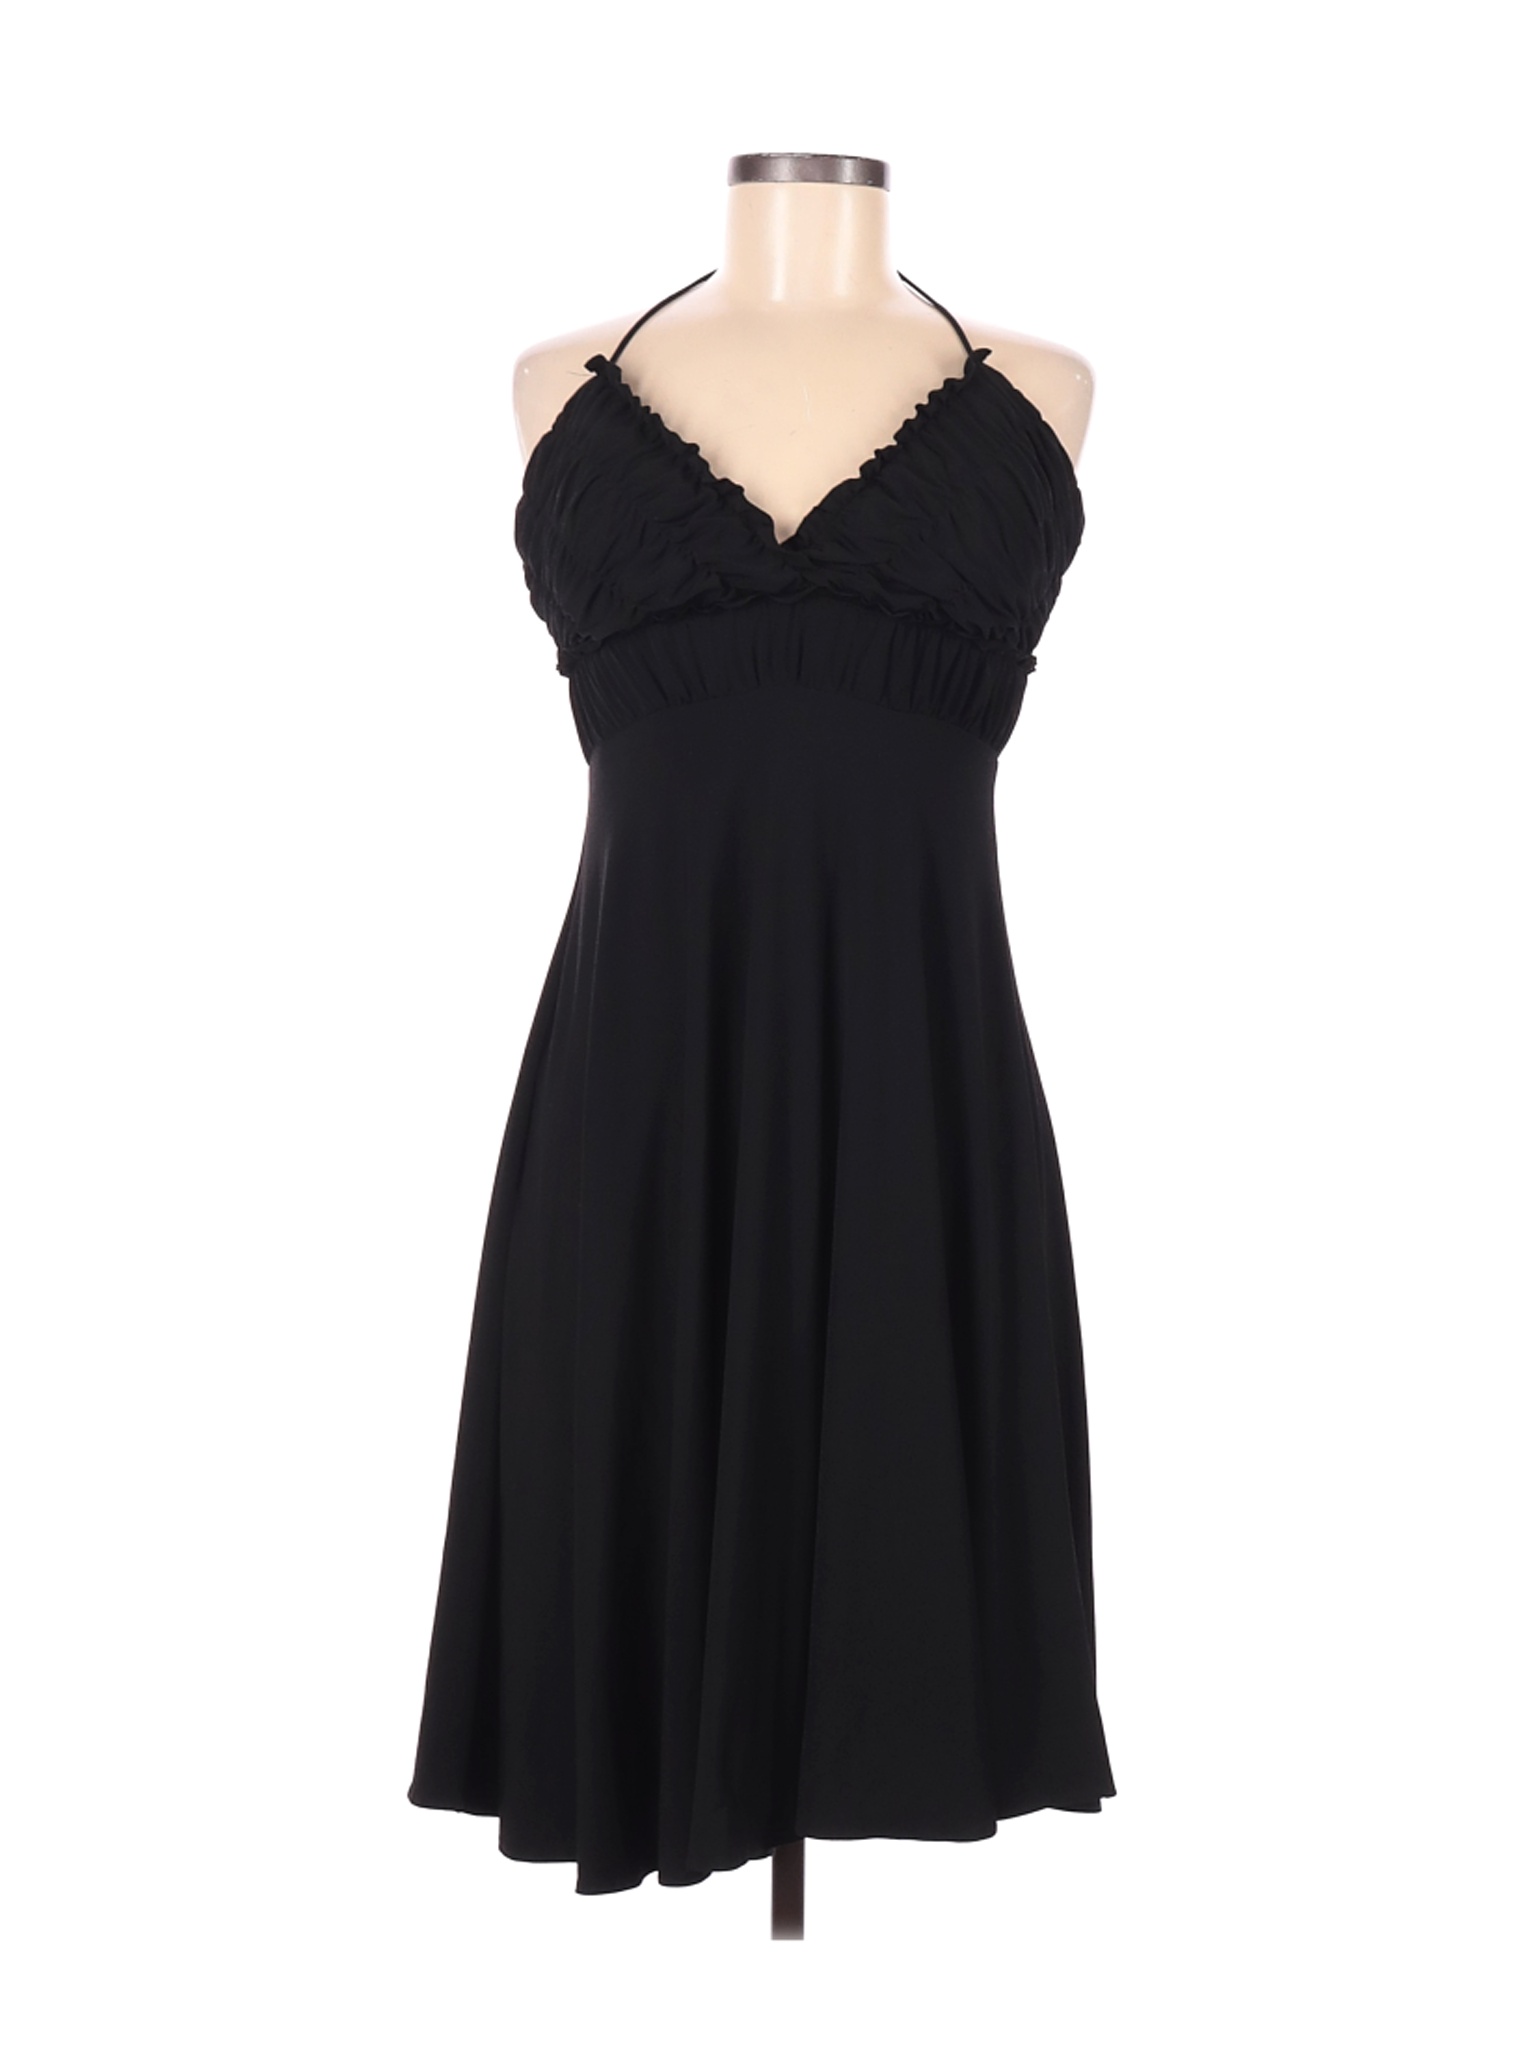 De Laru Women Black Cocktail Dress 8 | eBay